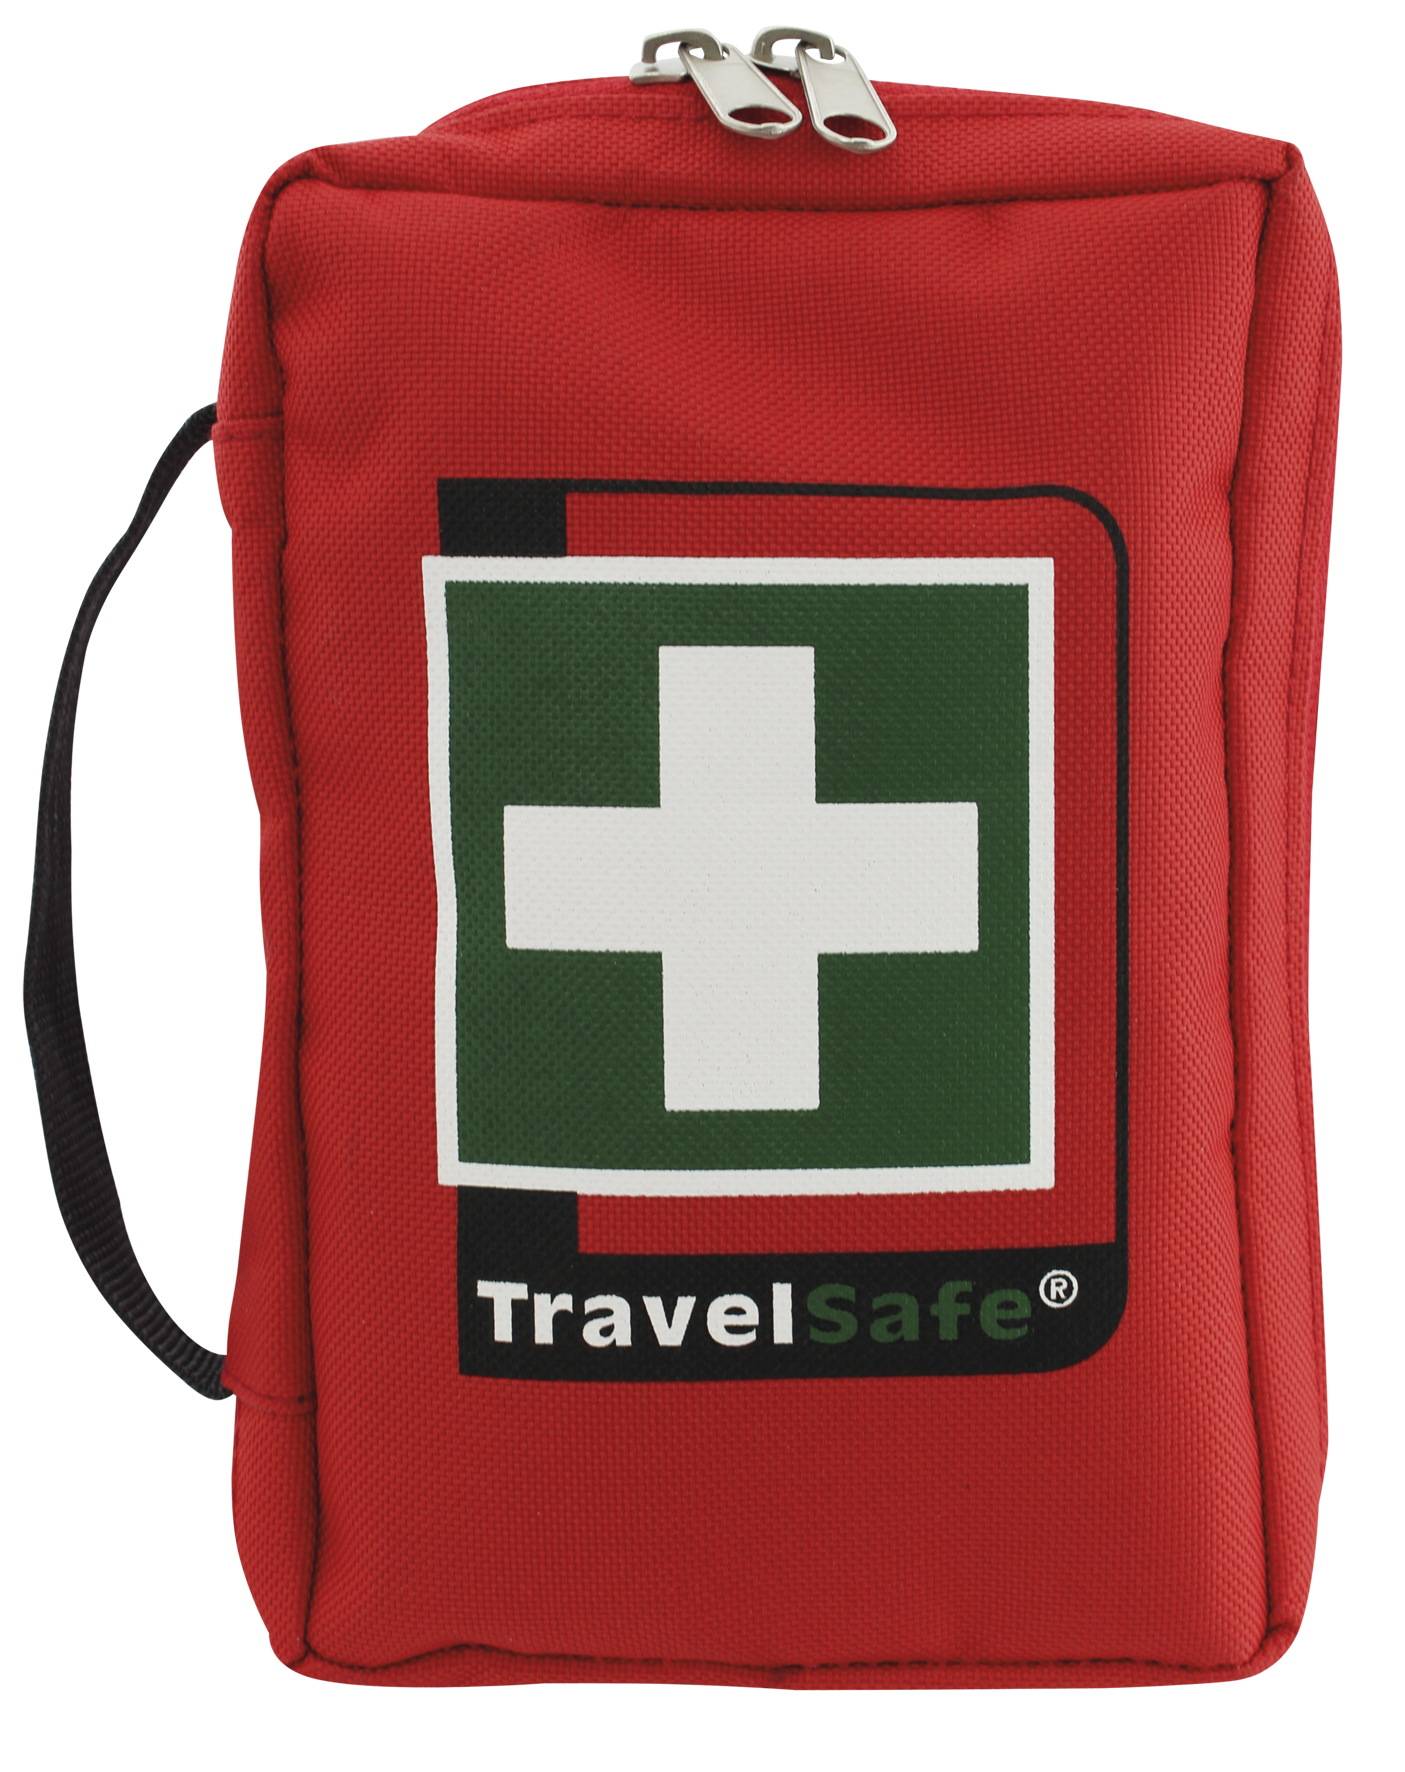 Verplicht toeter Persoon belast met sportgame Travelsafe First Aid Kit - Globe Tour